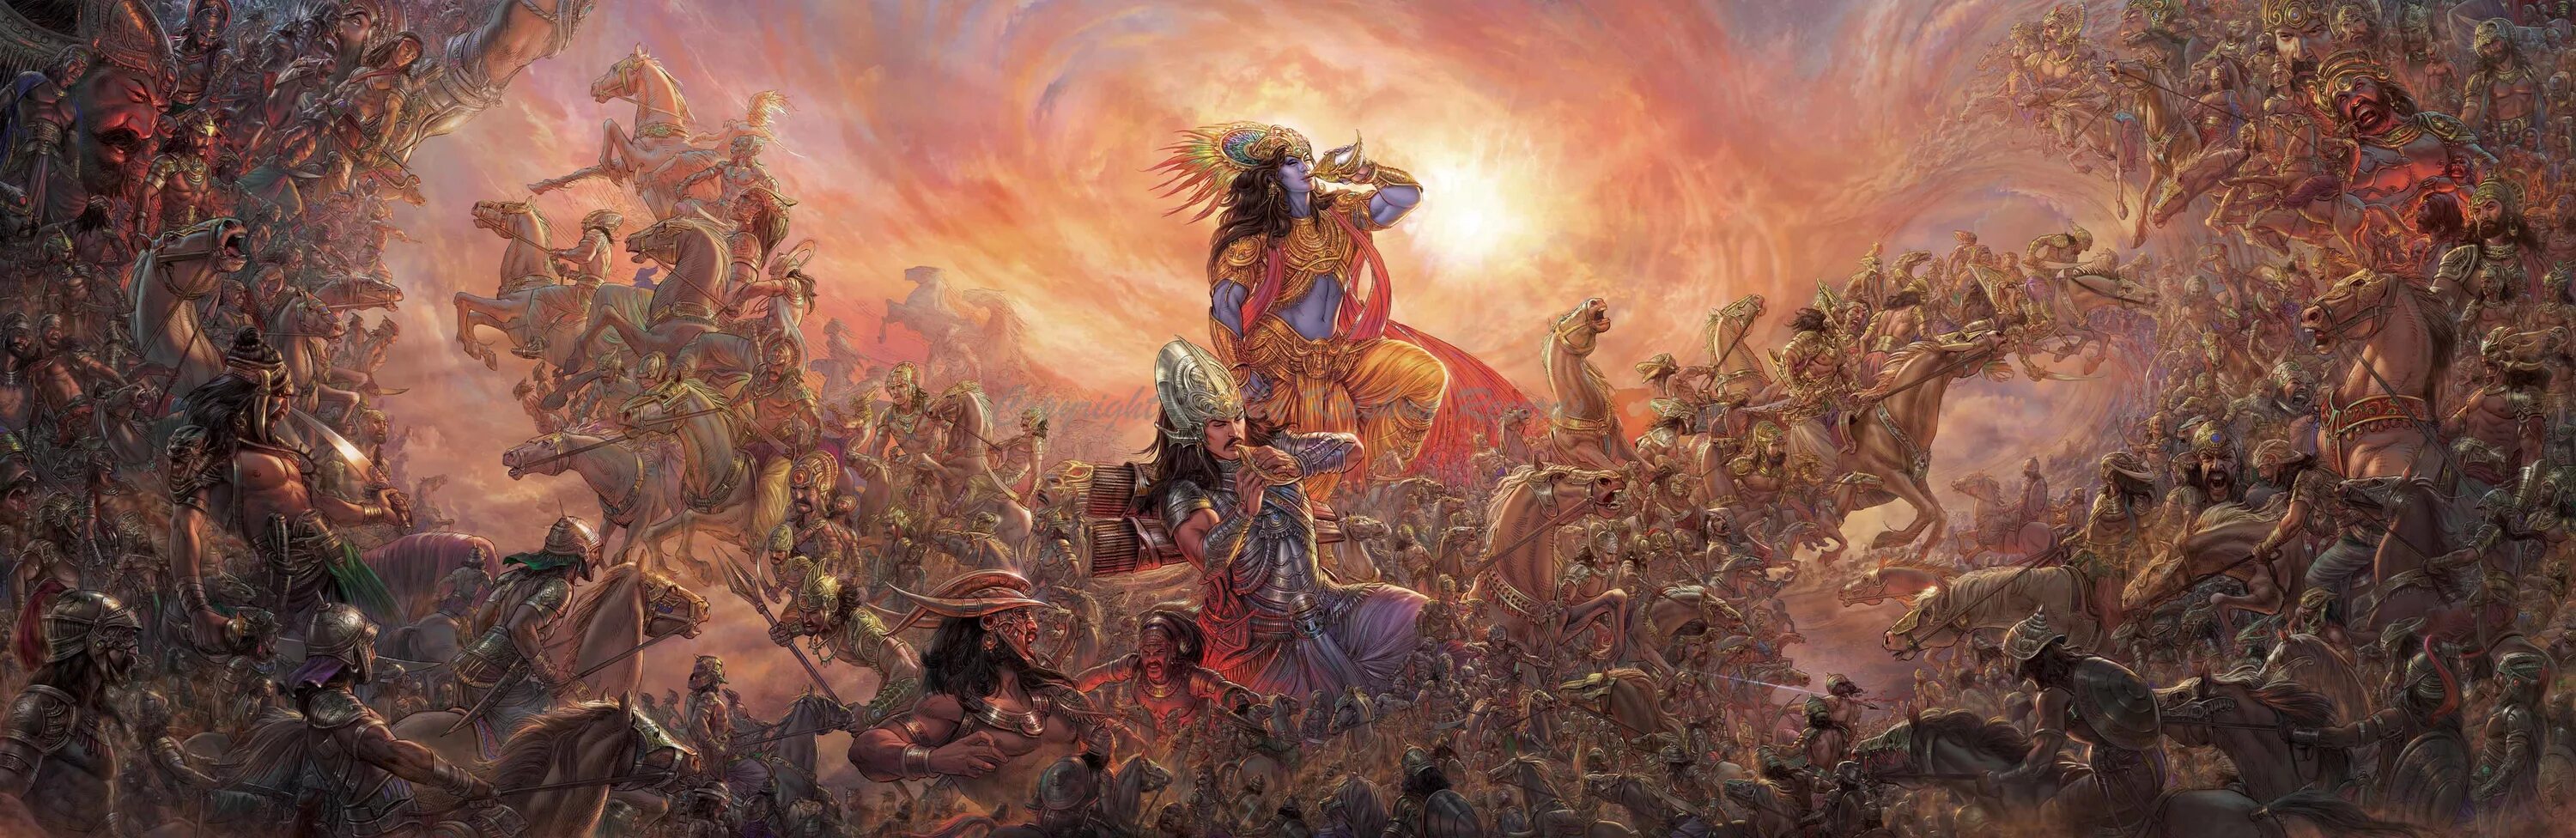 Битва ариев. Махабхарата Курукшетра битва. Битва на поле Курукшетра Махабхарата. Махабхарата битва богов. Великая битва Махабхарата.